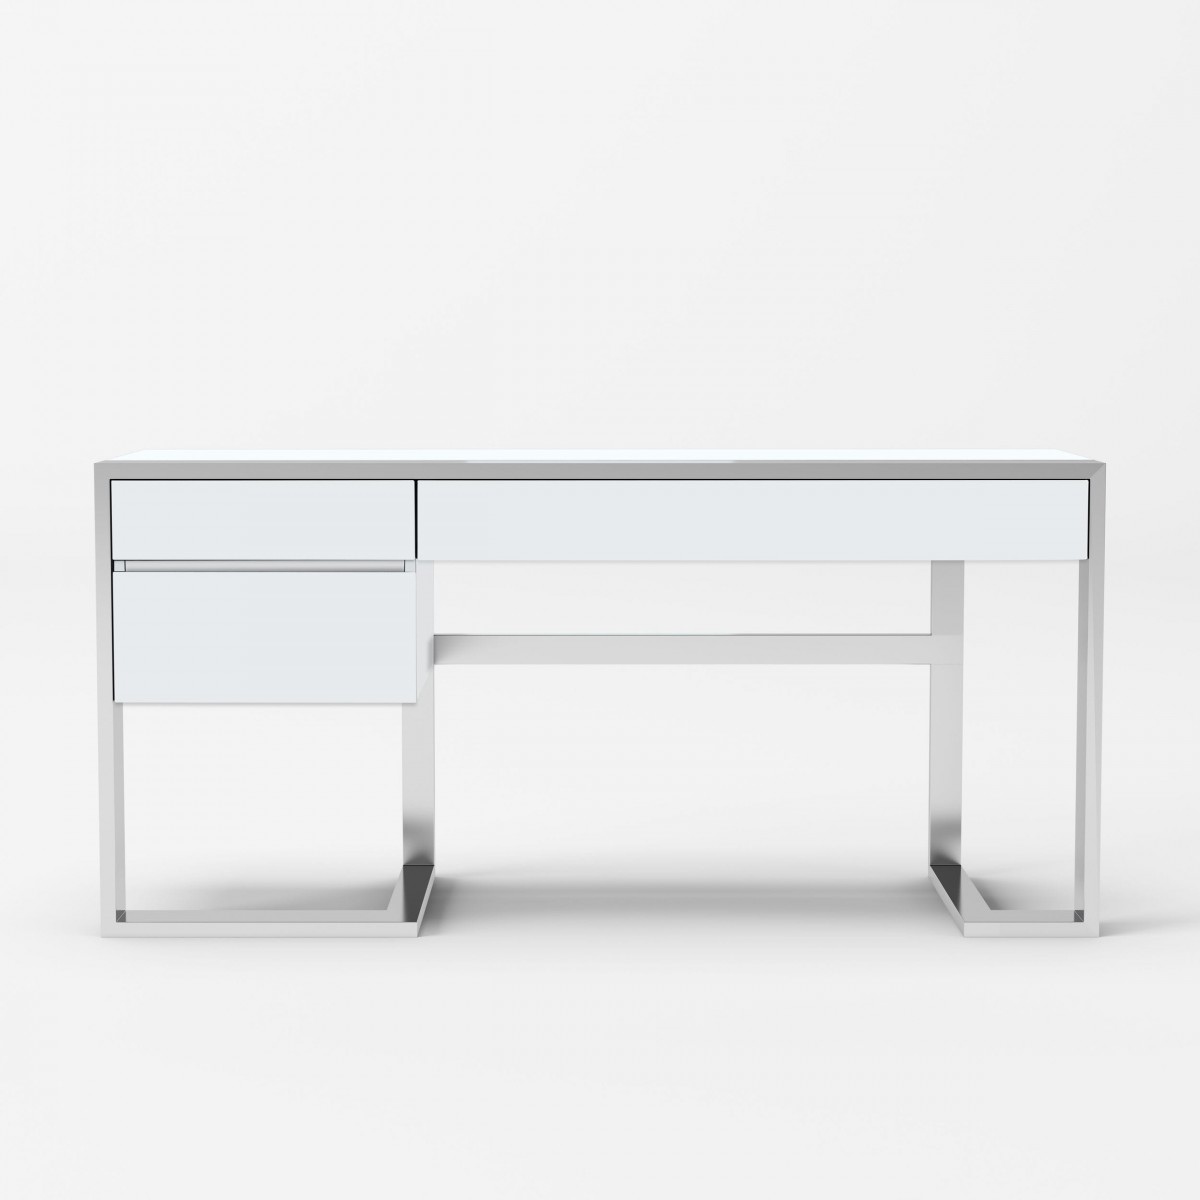 Elite White High Gloss and Stainless Steel Desk